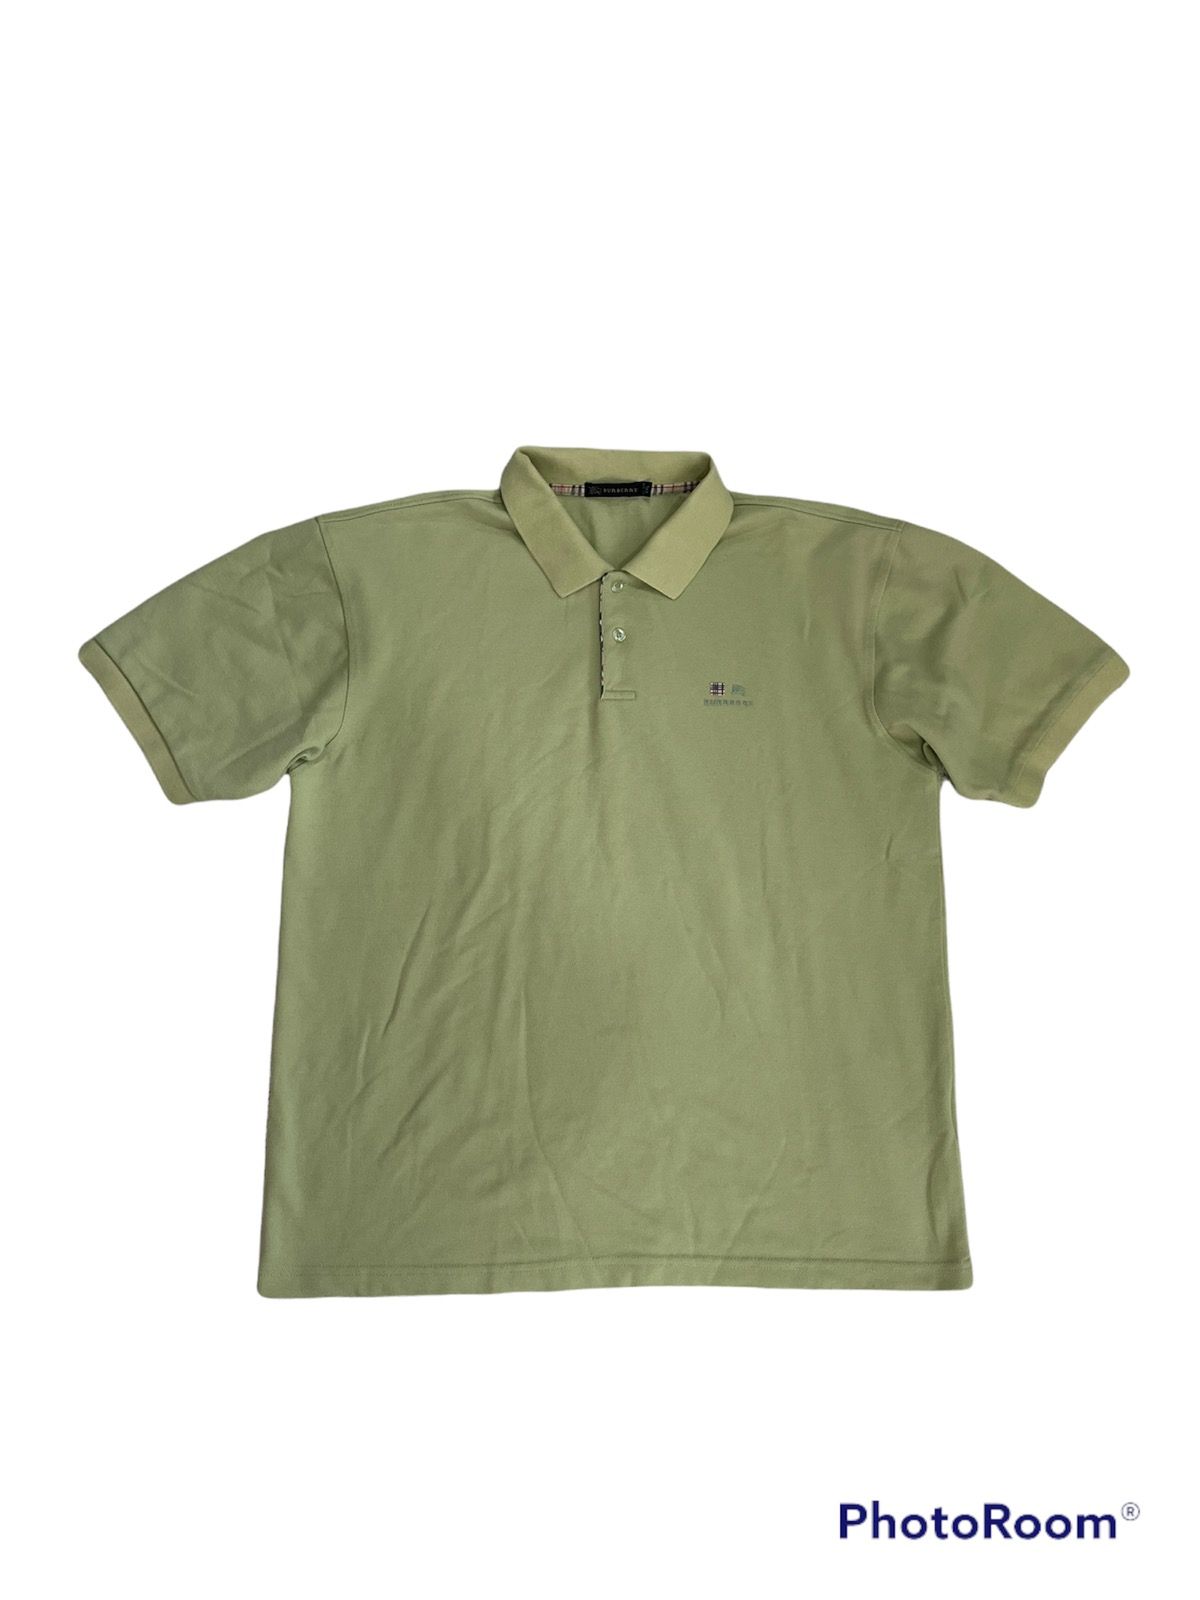 Burberry Burberry London green polo shirt men’s size xxl Size US XXL / EU 58 / 5 - 1 Preview